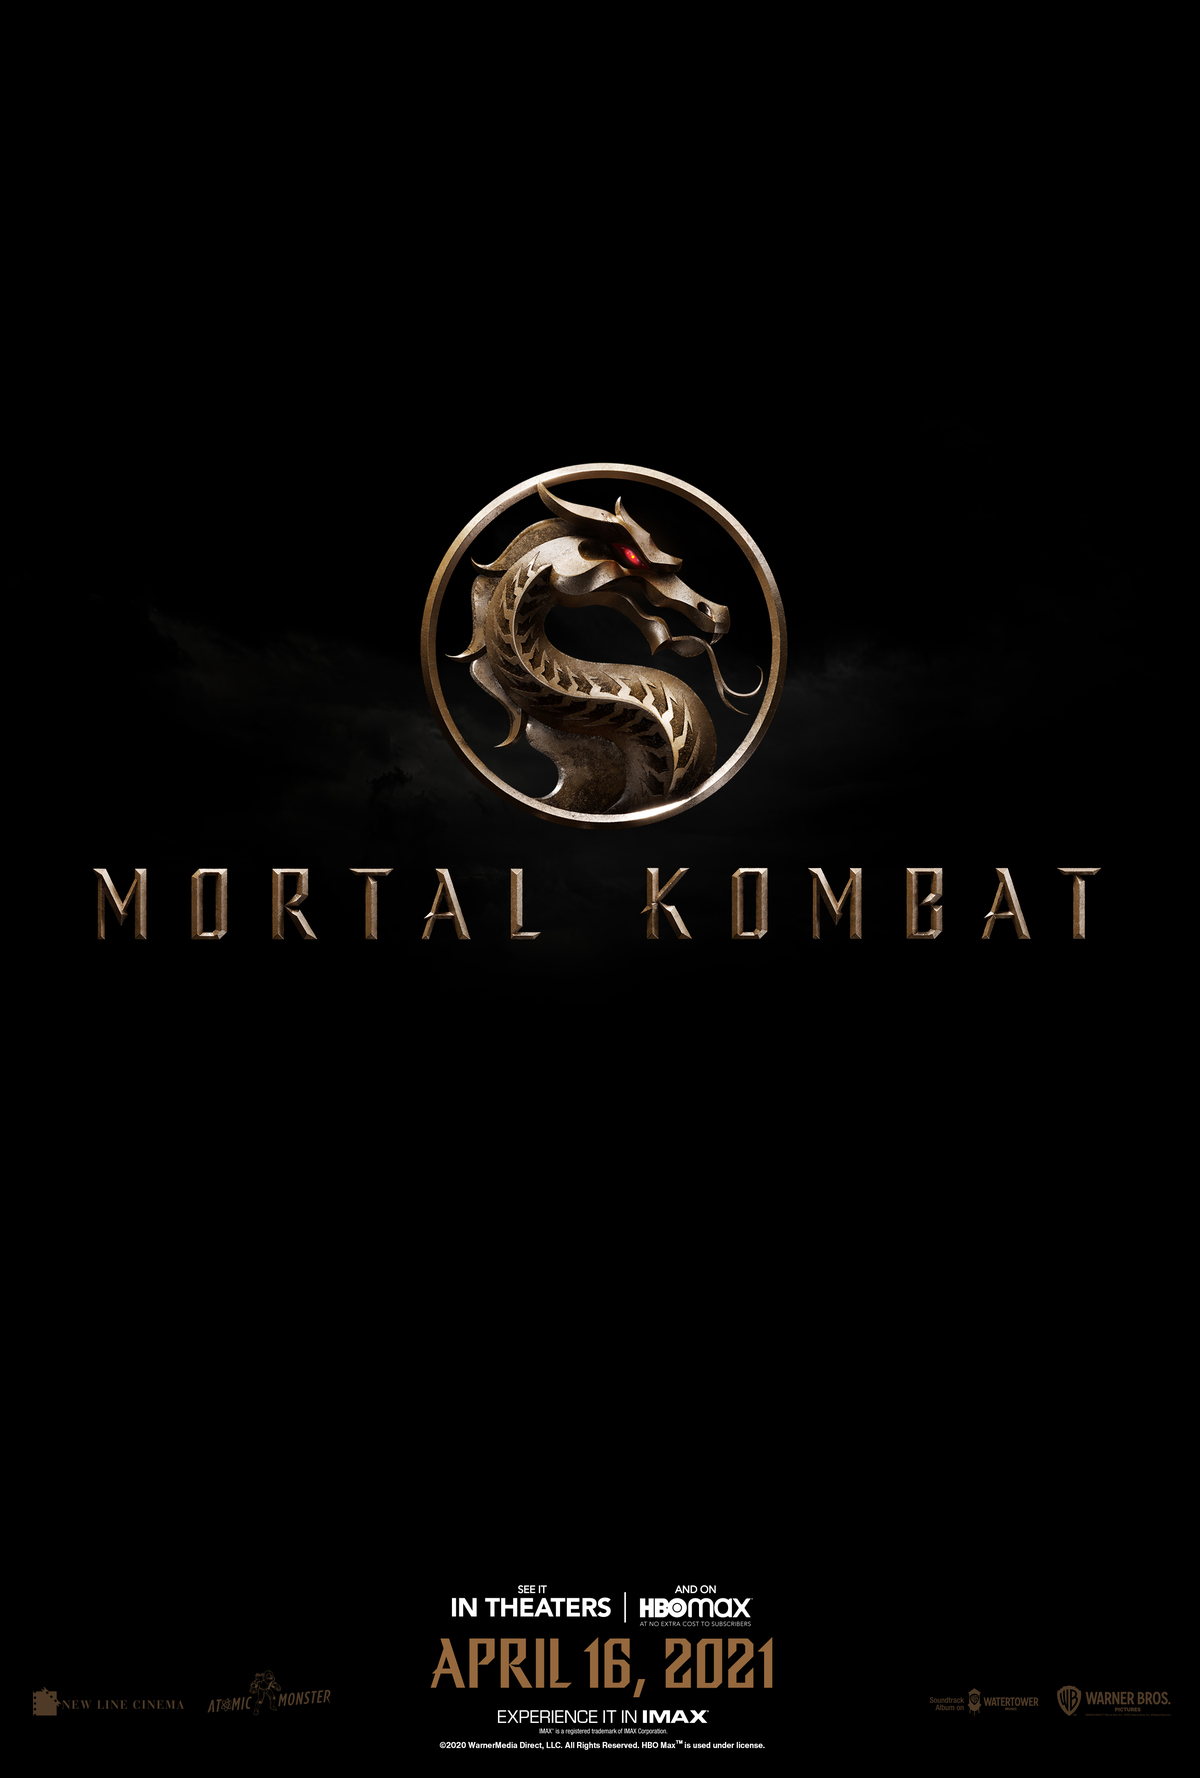 Kobra (Mortal Kombat) Fan Casting